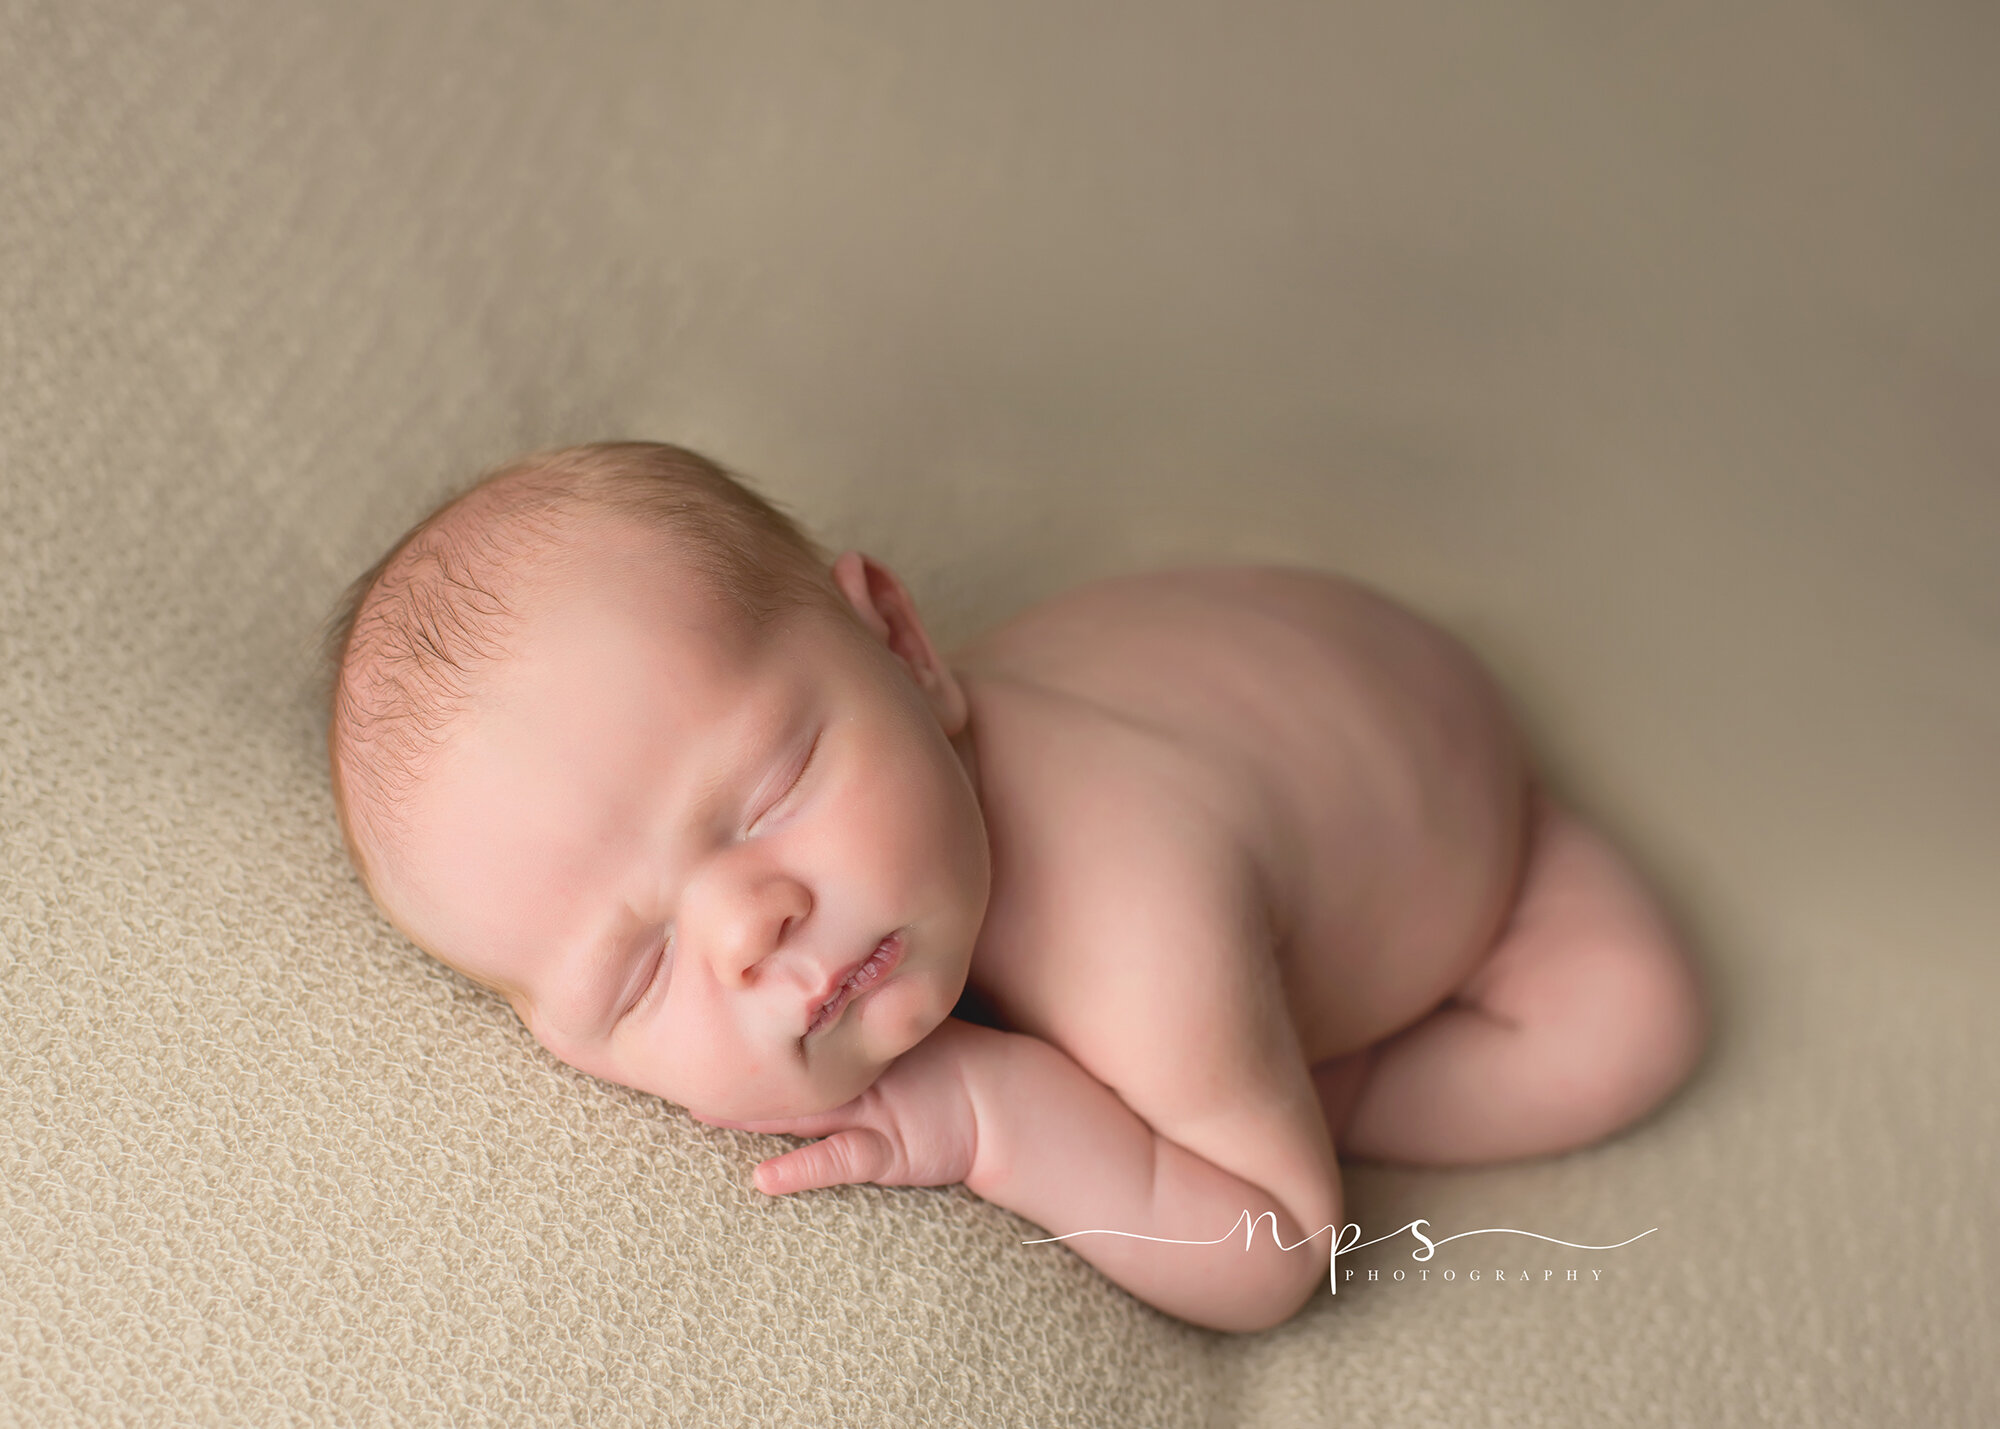 NPS-Photography-Sanford Newborn Photographer-Baby-C-005